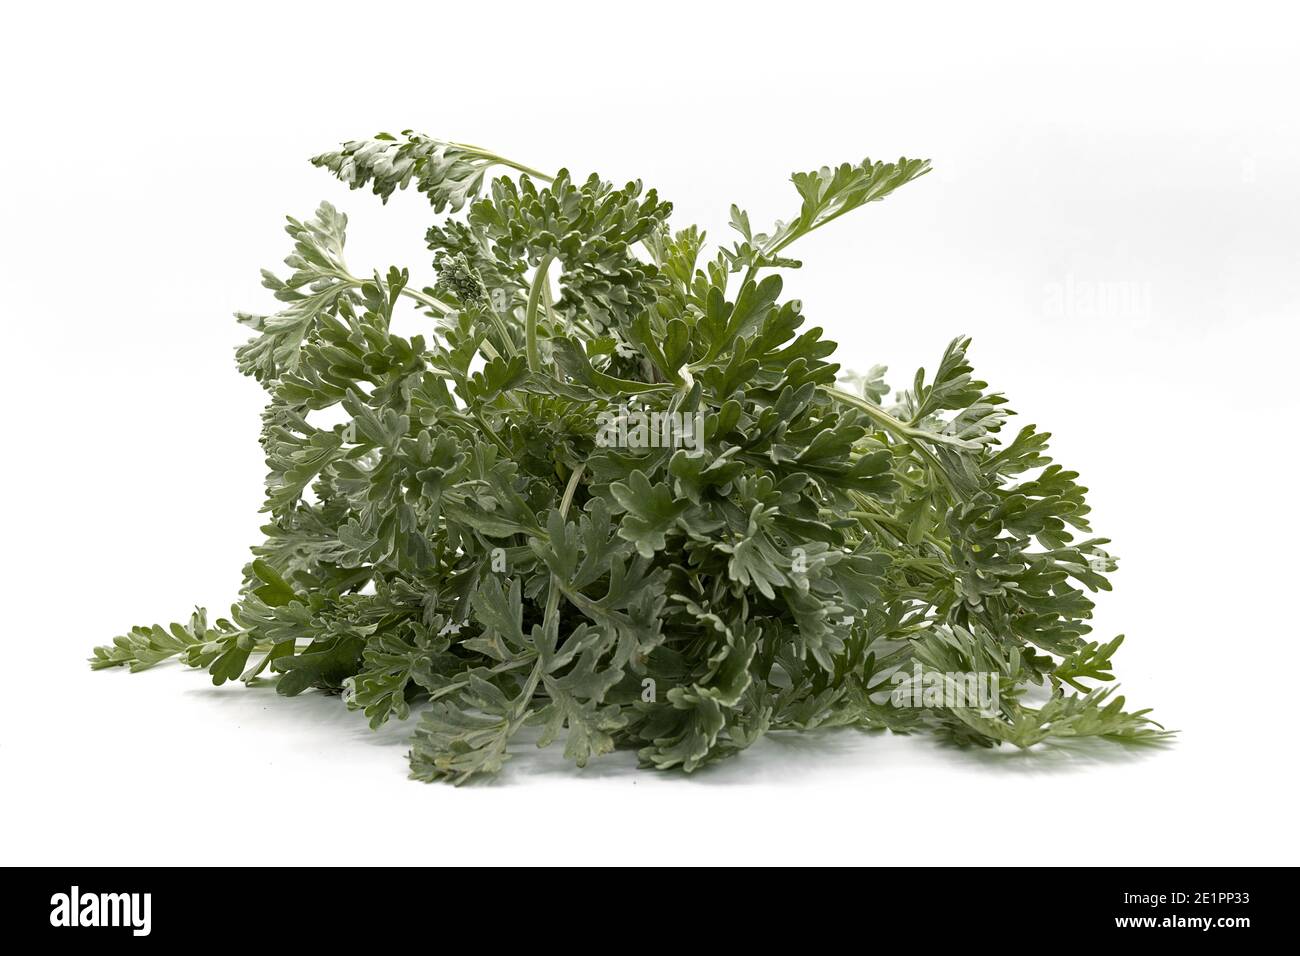 Artemisia absinthium plant, common name wormwood, isolated on white background Stock Photo